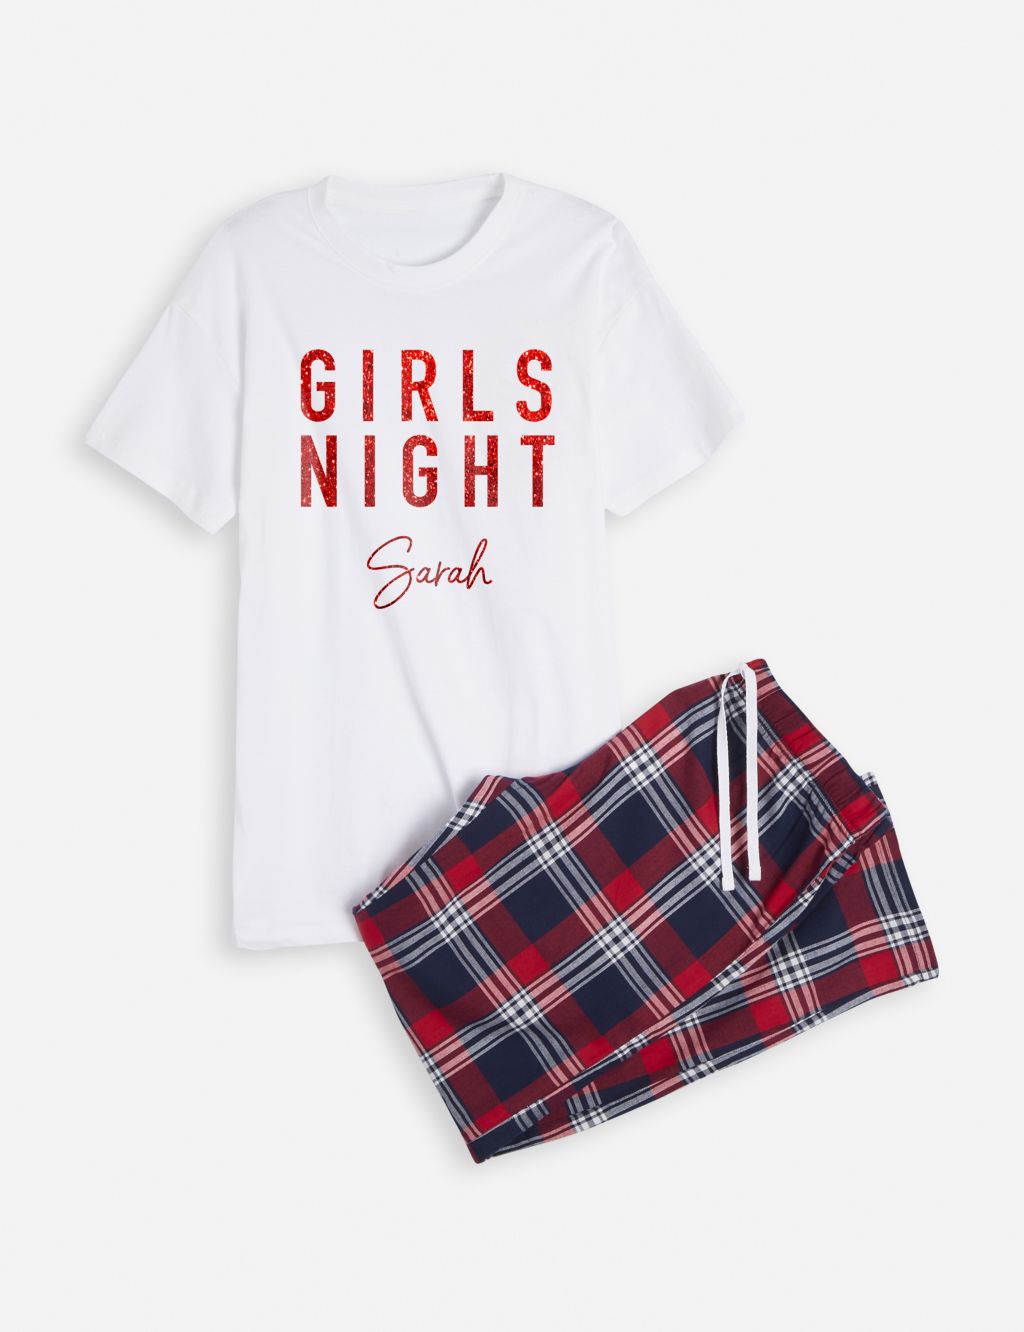 Personalised Ladies Girls Night Pyjamas by Dollymix